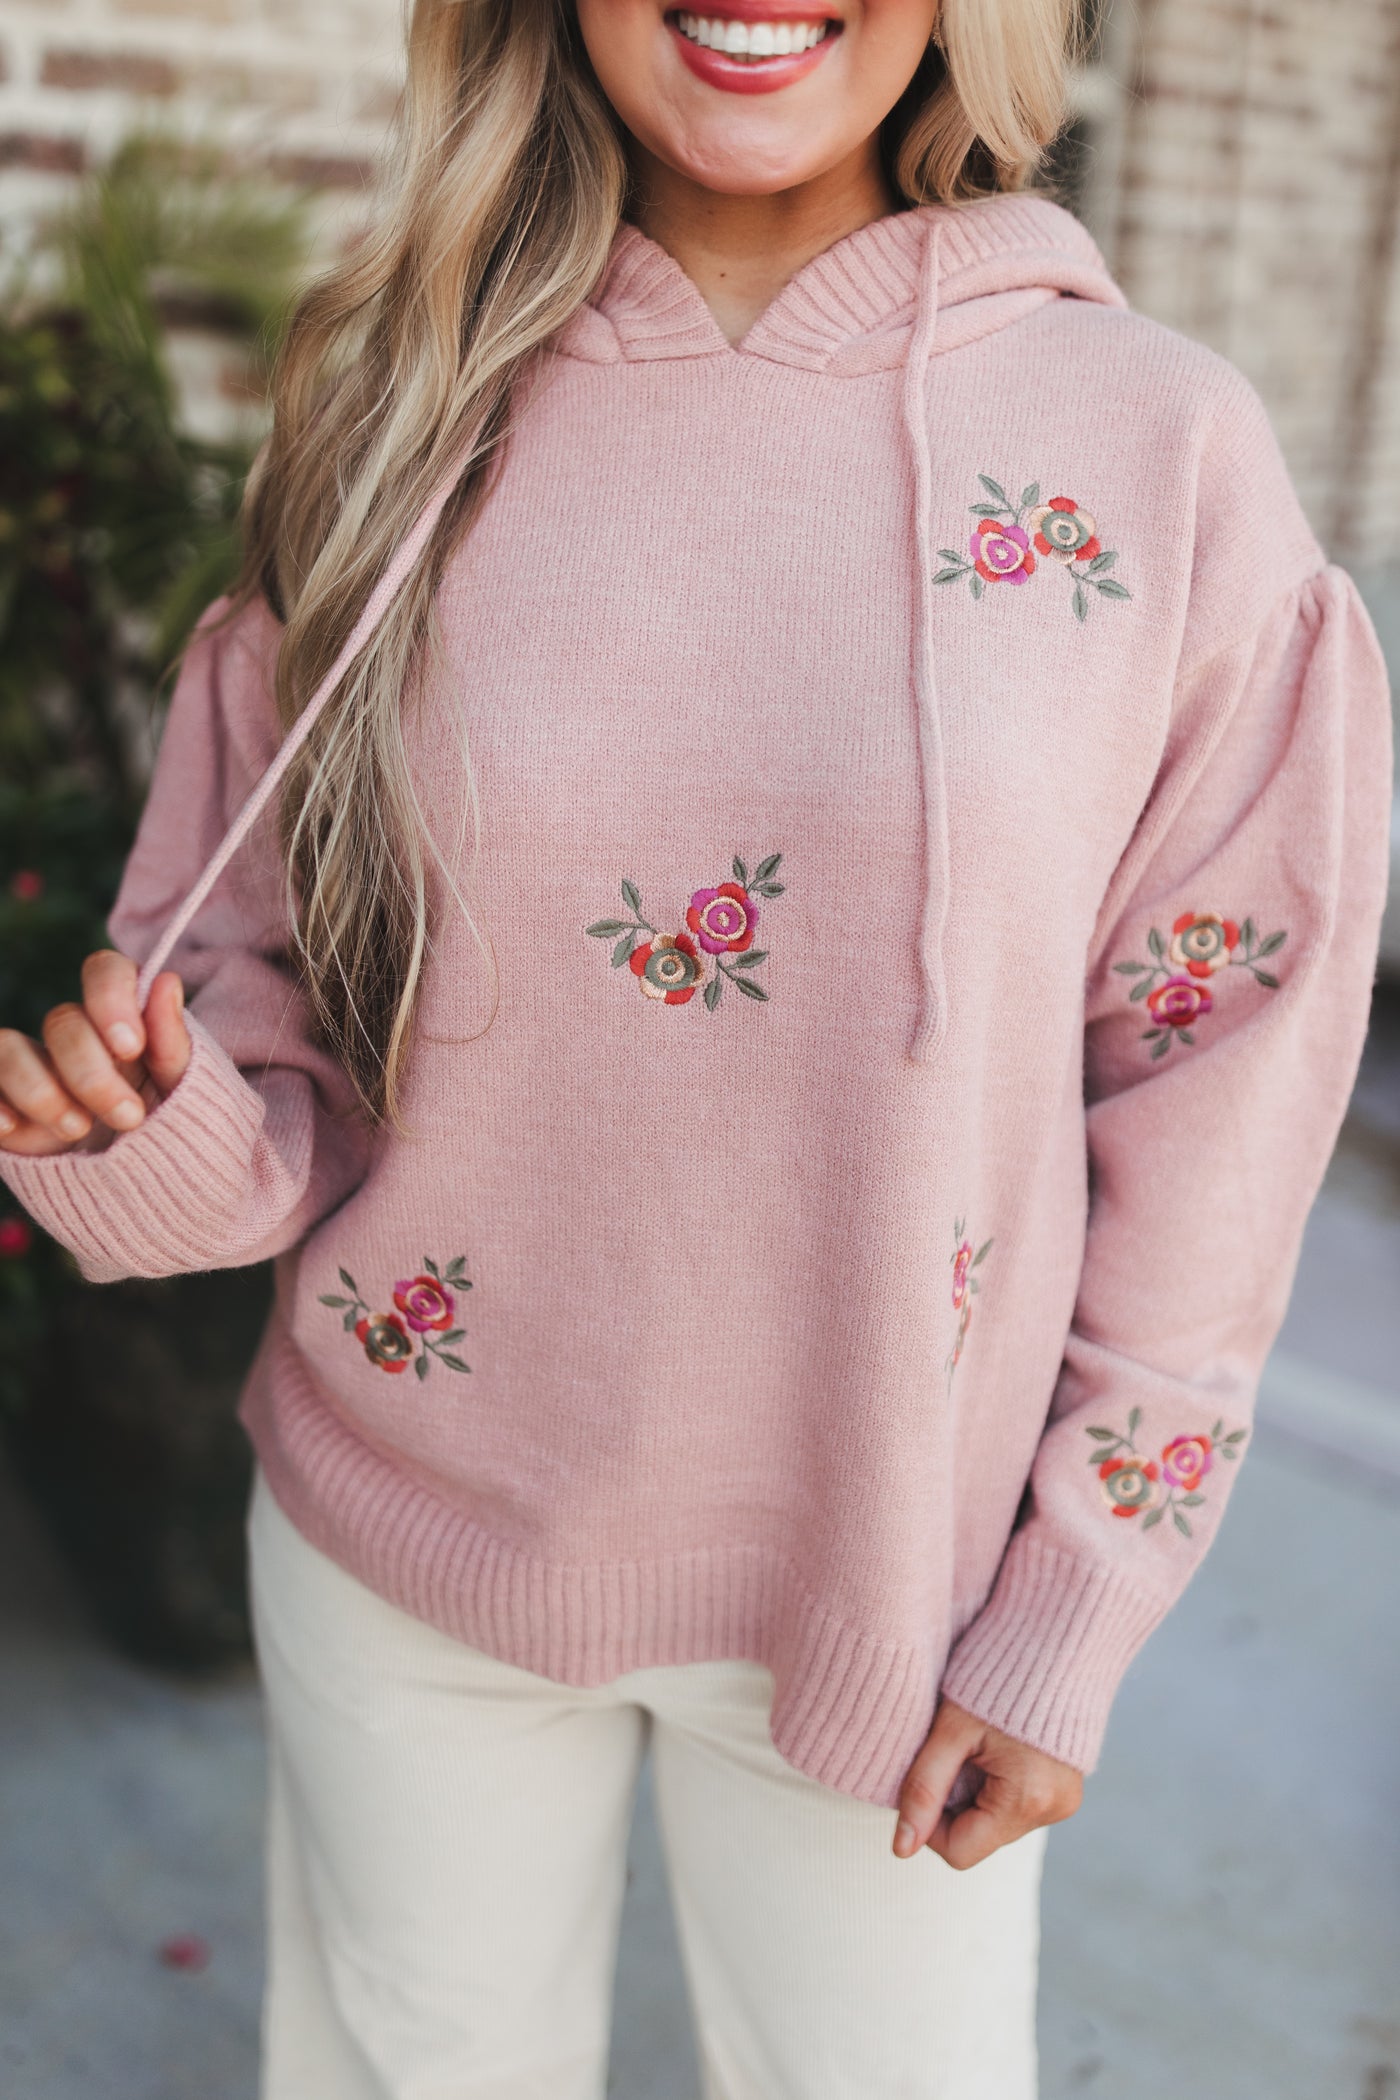 Karlie Rose Floral Embroidered Novelty Sweater Hoodie